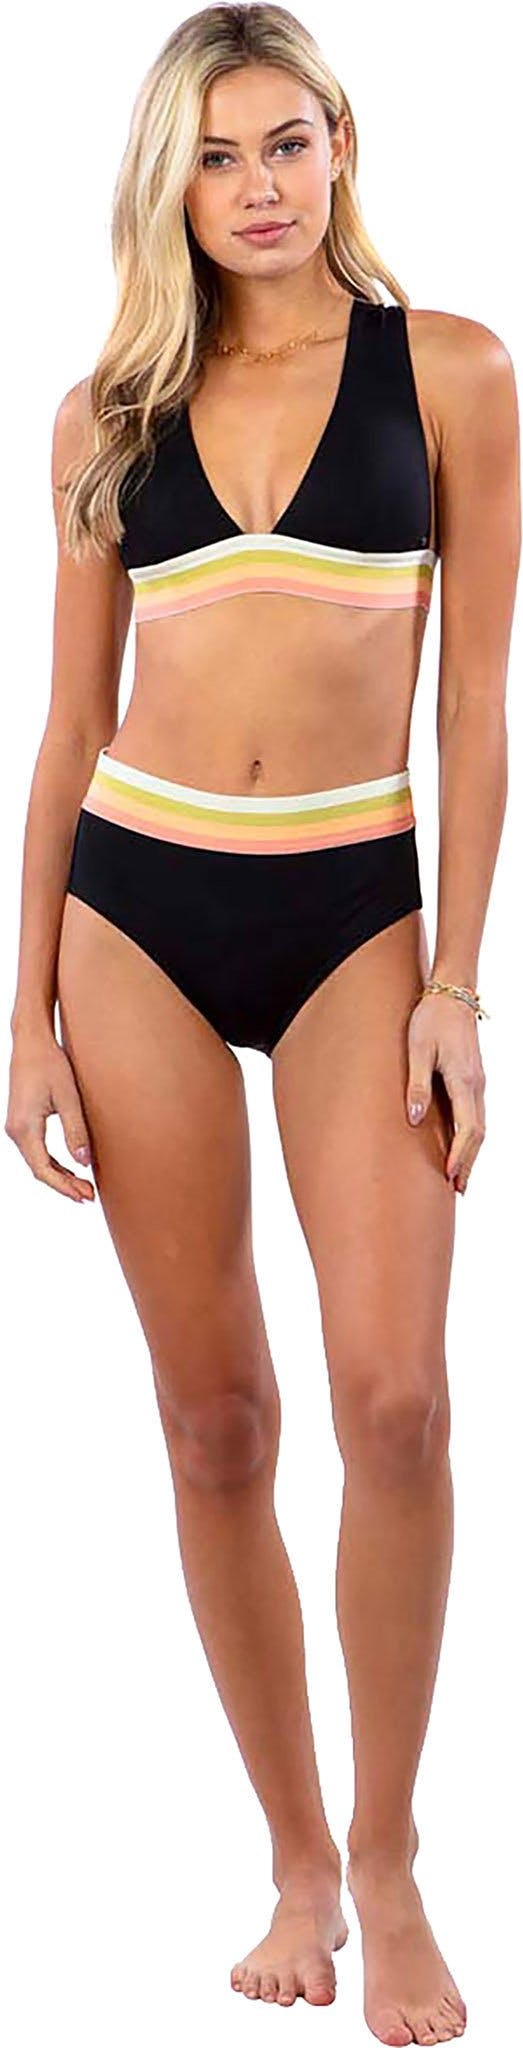 Product gallery image number 2 for product Beach Botanica High Waist Good Bikini Bottom - Women's